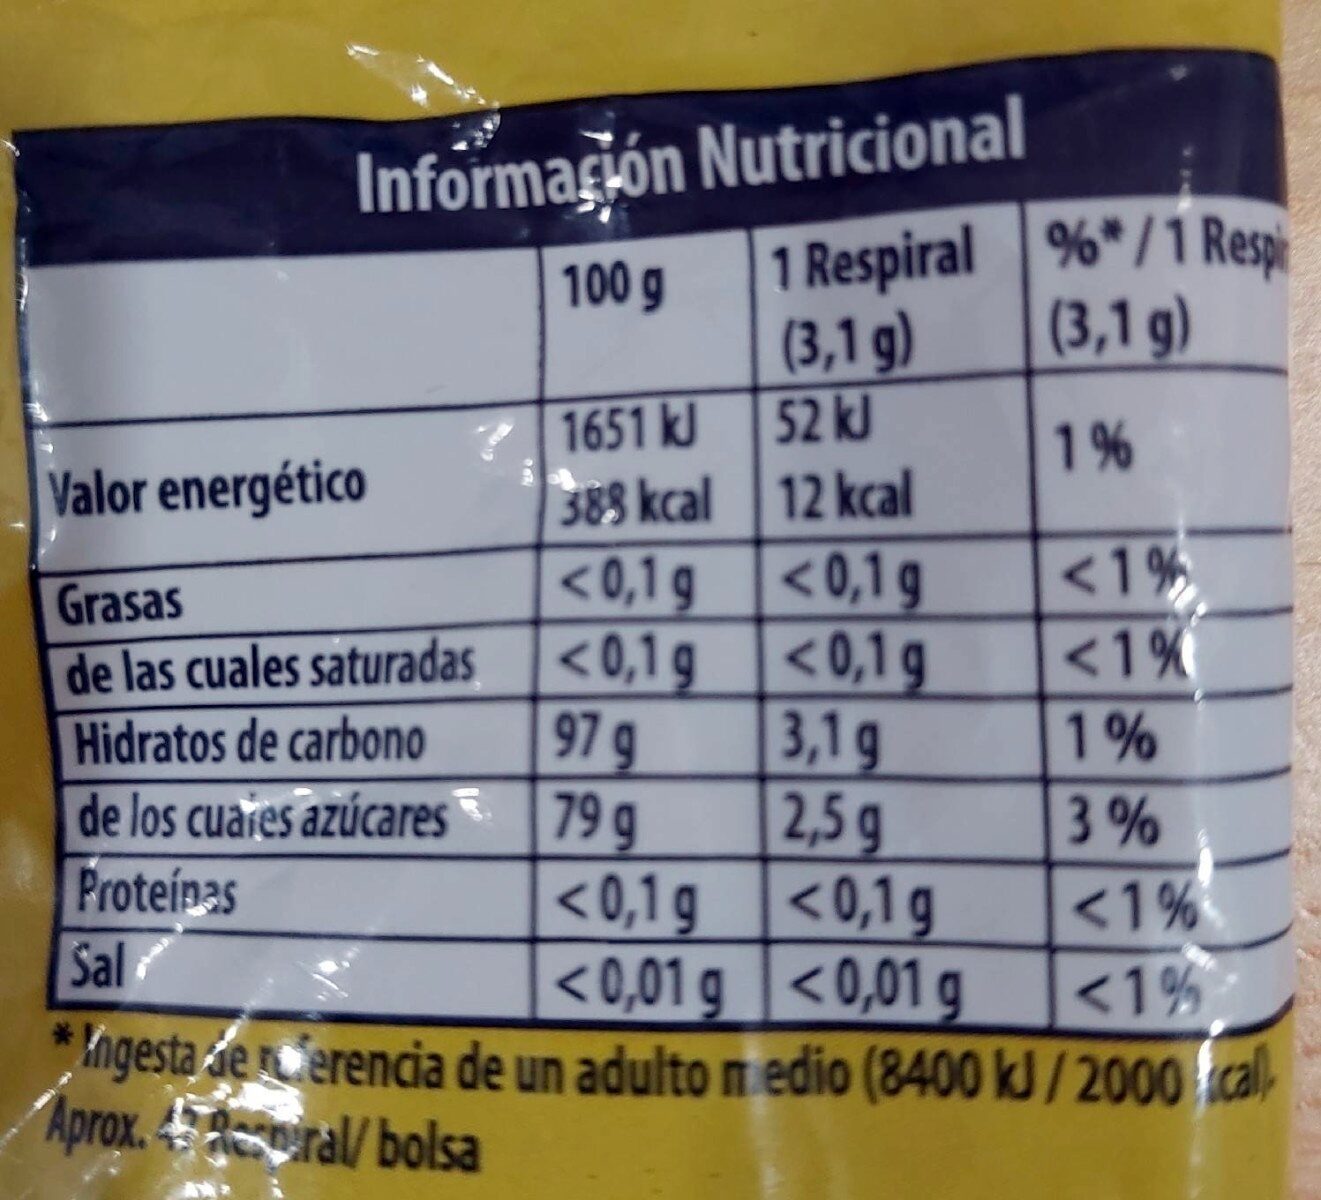 Respiral limón mentol - Nutrition facts - es